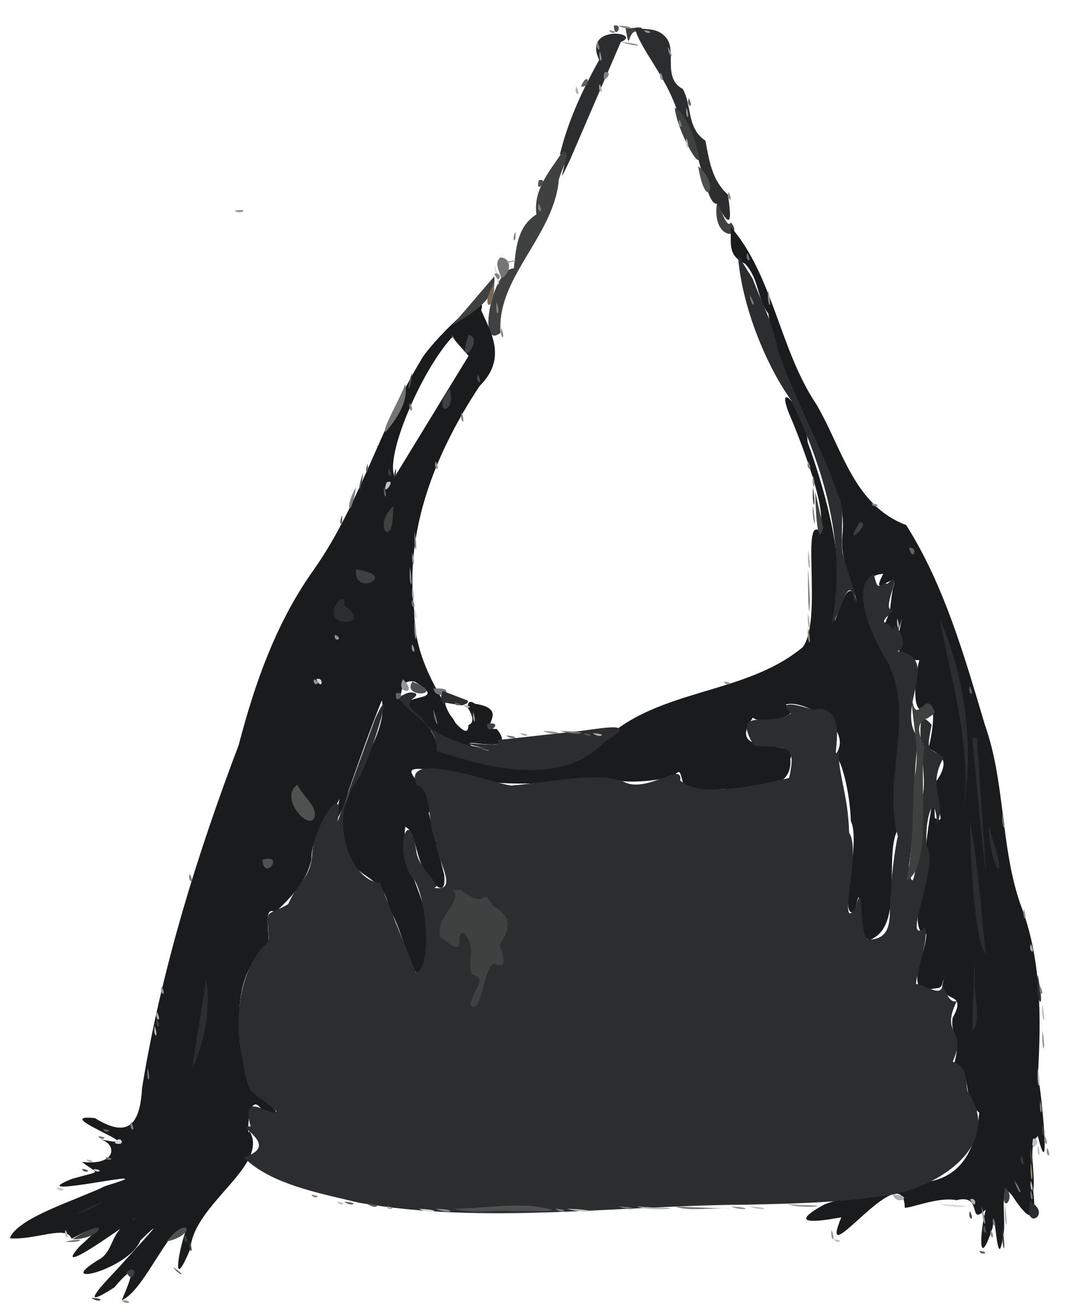 Black Handbag with tassles no logo png transparent